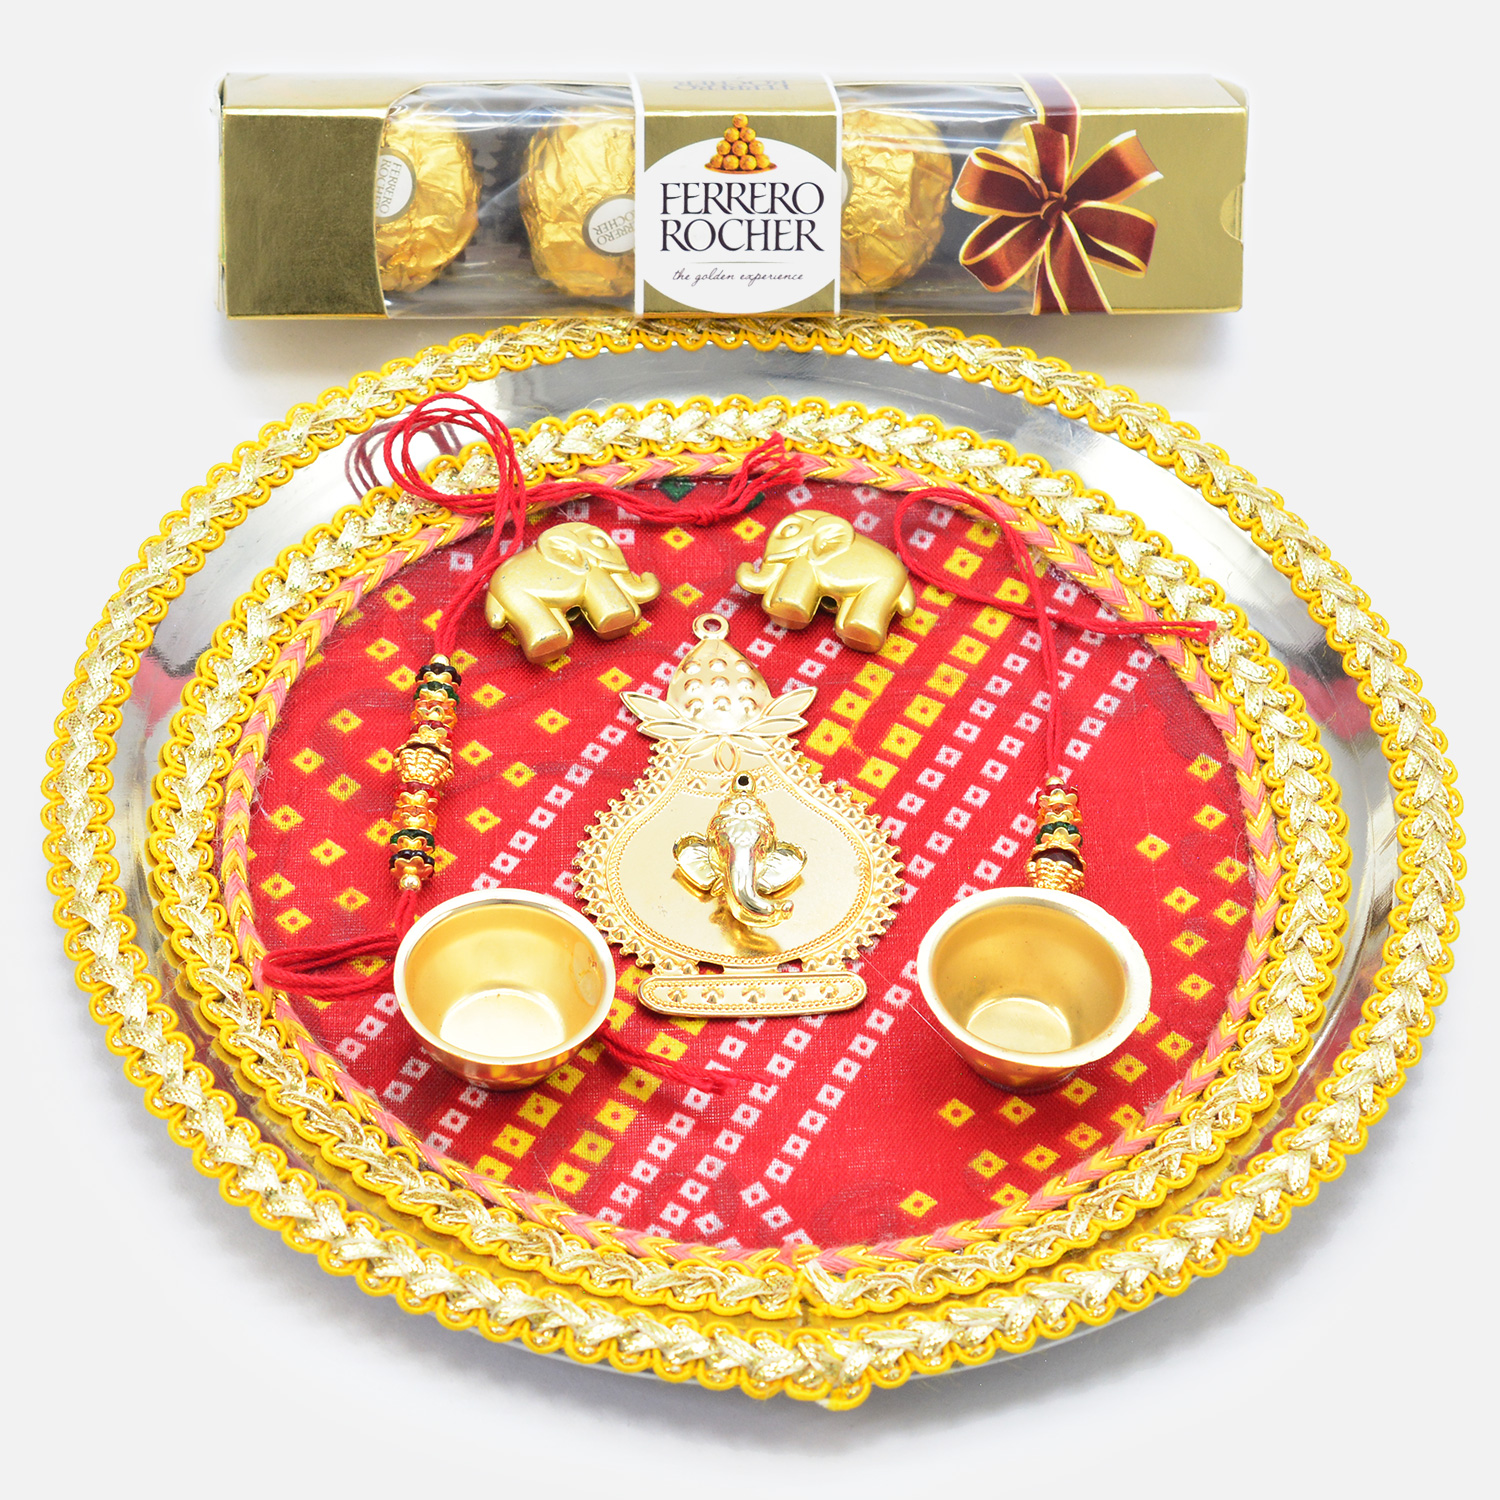 Rajasthani Fabric Base Designer Ganesha Pooja Thali with Ferrero Rocher Chocolate 4 Pc